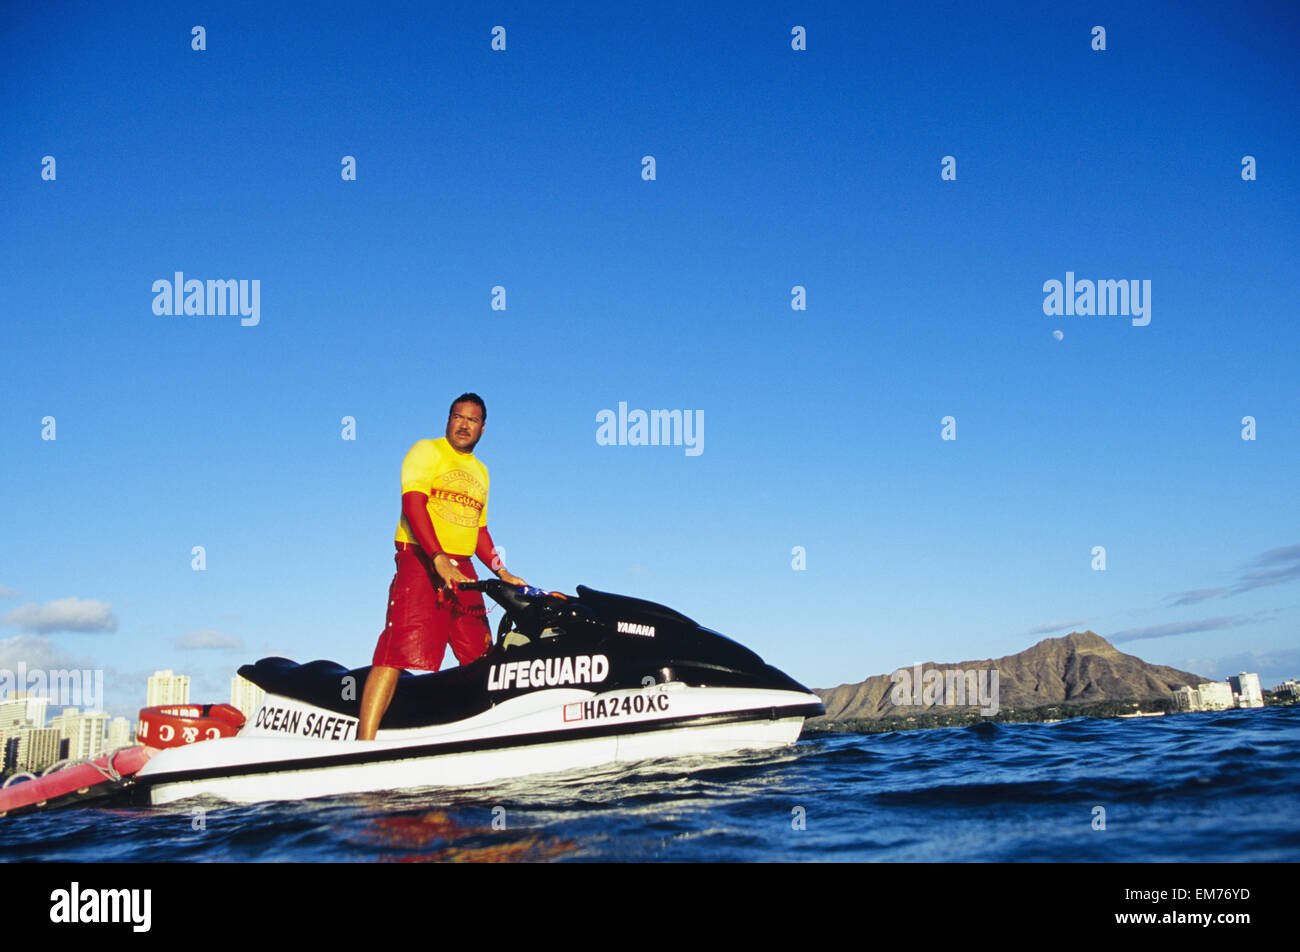 Hawaii, Oahu, Honolulu, Lifeguard On Jet Ski, Diamond Head In Background.  No Model Release Stock Photo - Alamy